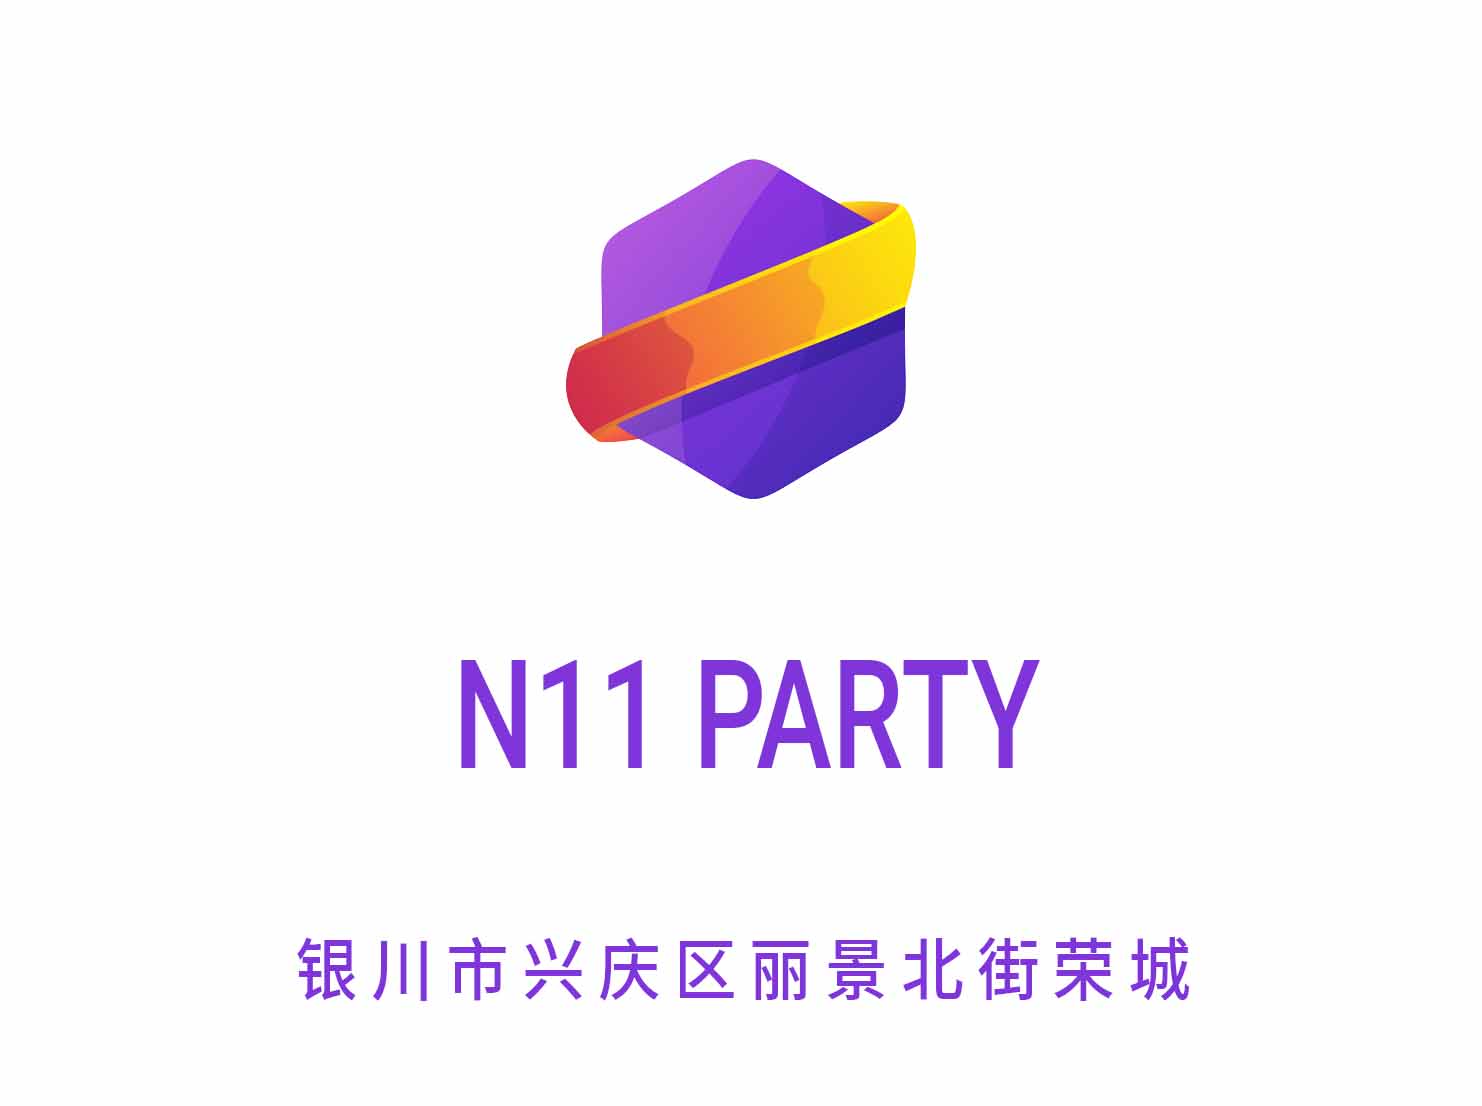 银川N11 PARTY KTV